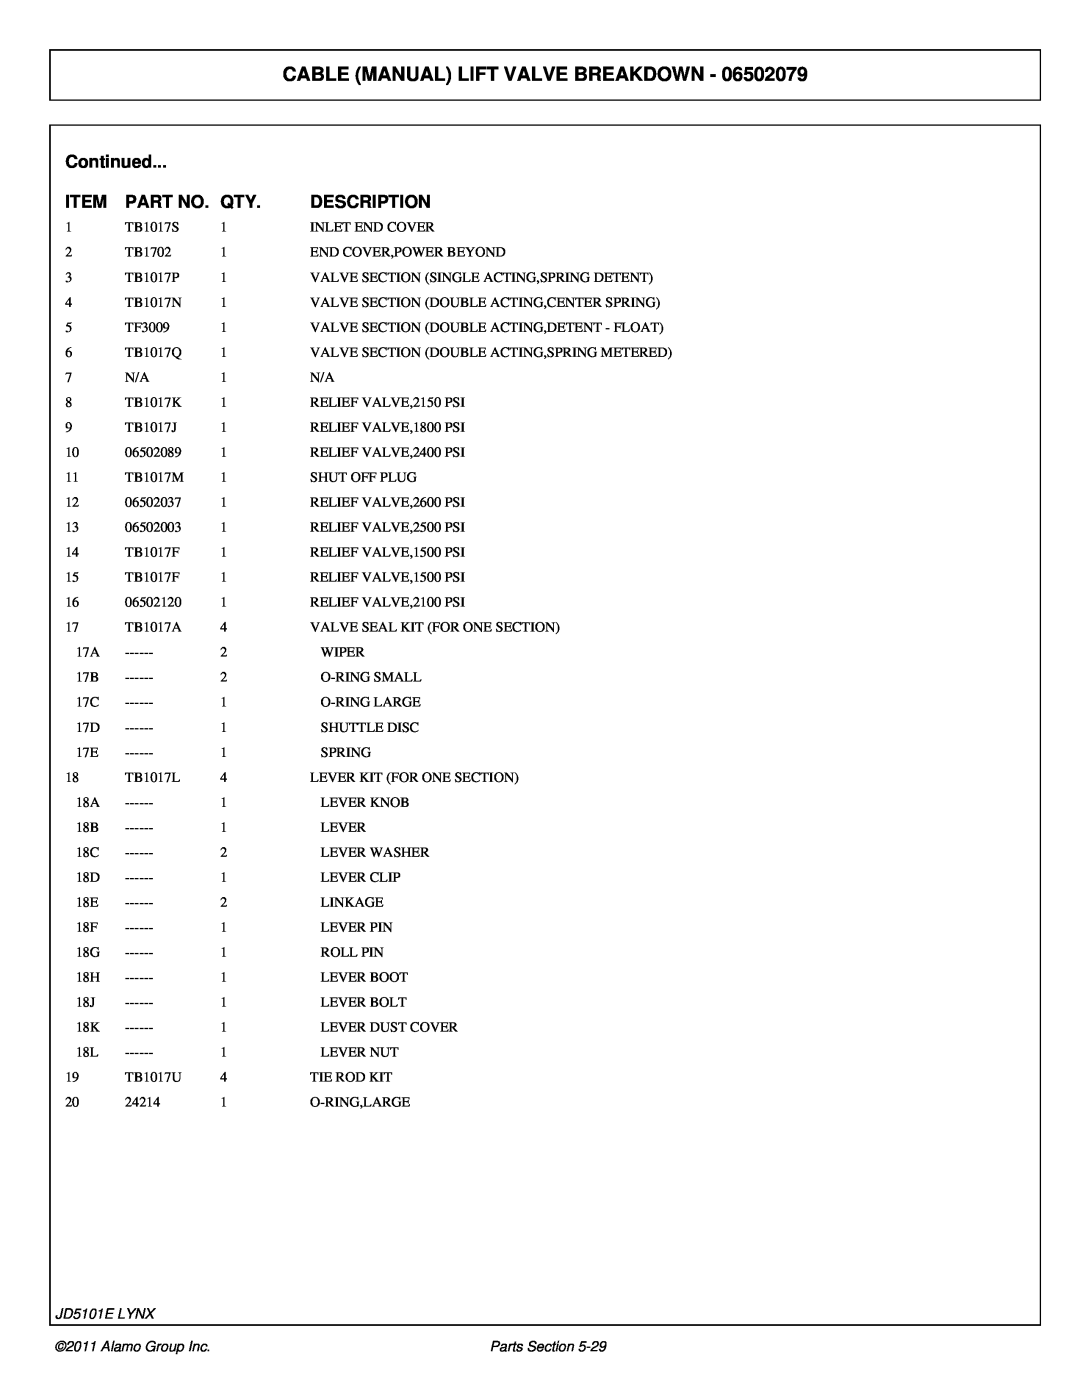 Tiger Products Co., Ltd 5093E Cable Manual Lift Valve Breakdown, Continued, Item, Part No. Qty, Description, JD5101E LYNX 